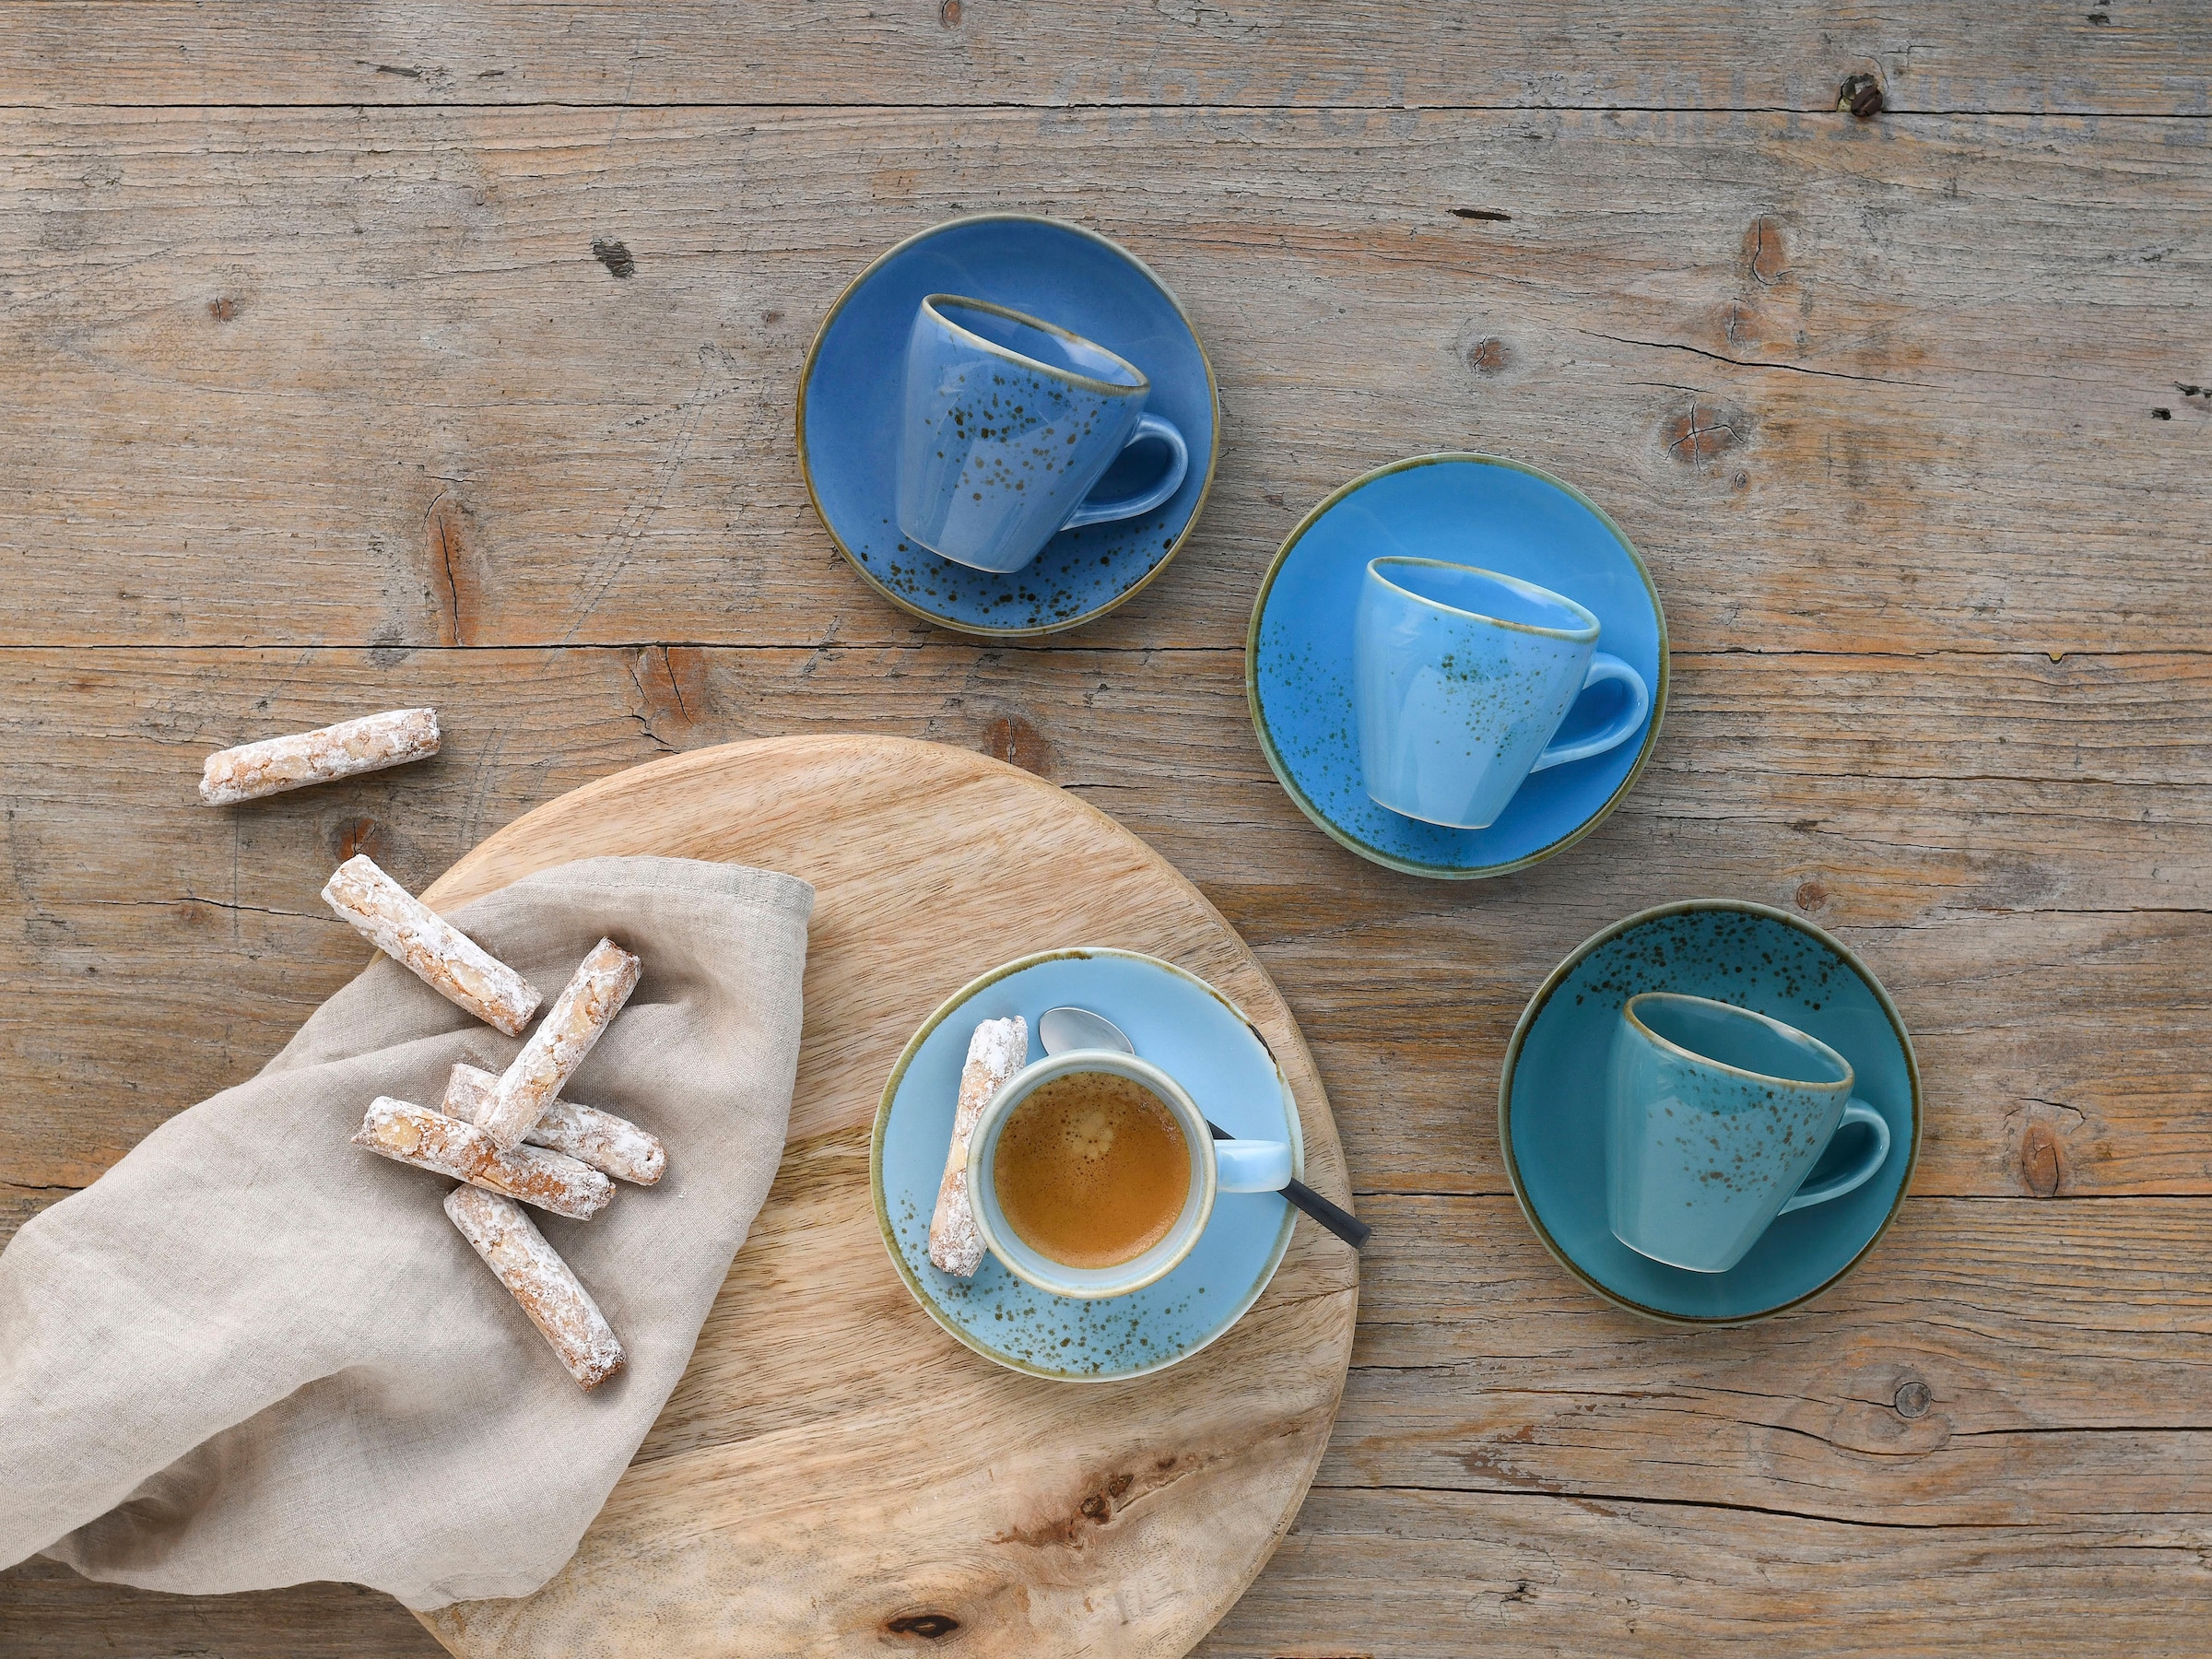 CreaTable Espressotasse »Kaffeetasse NATURE COLLECTION Aqua«, (Set, 8 tlg.), Tassen Set, aktuelle Blautöne mit Sprenkel, 4 Tassen, 4 Untertassen